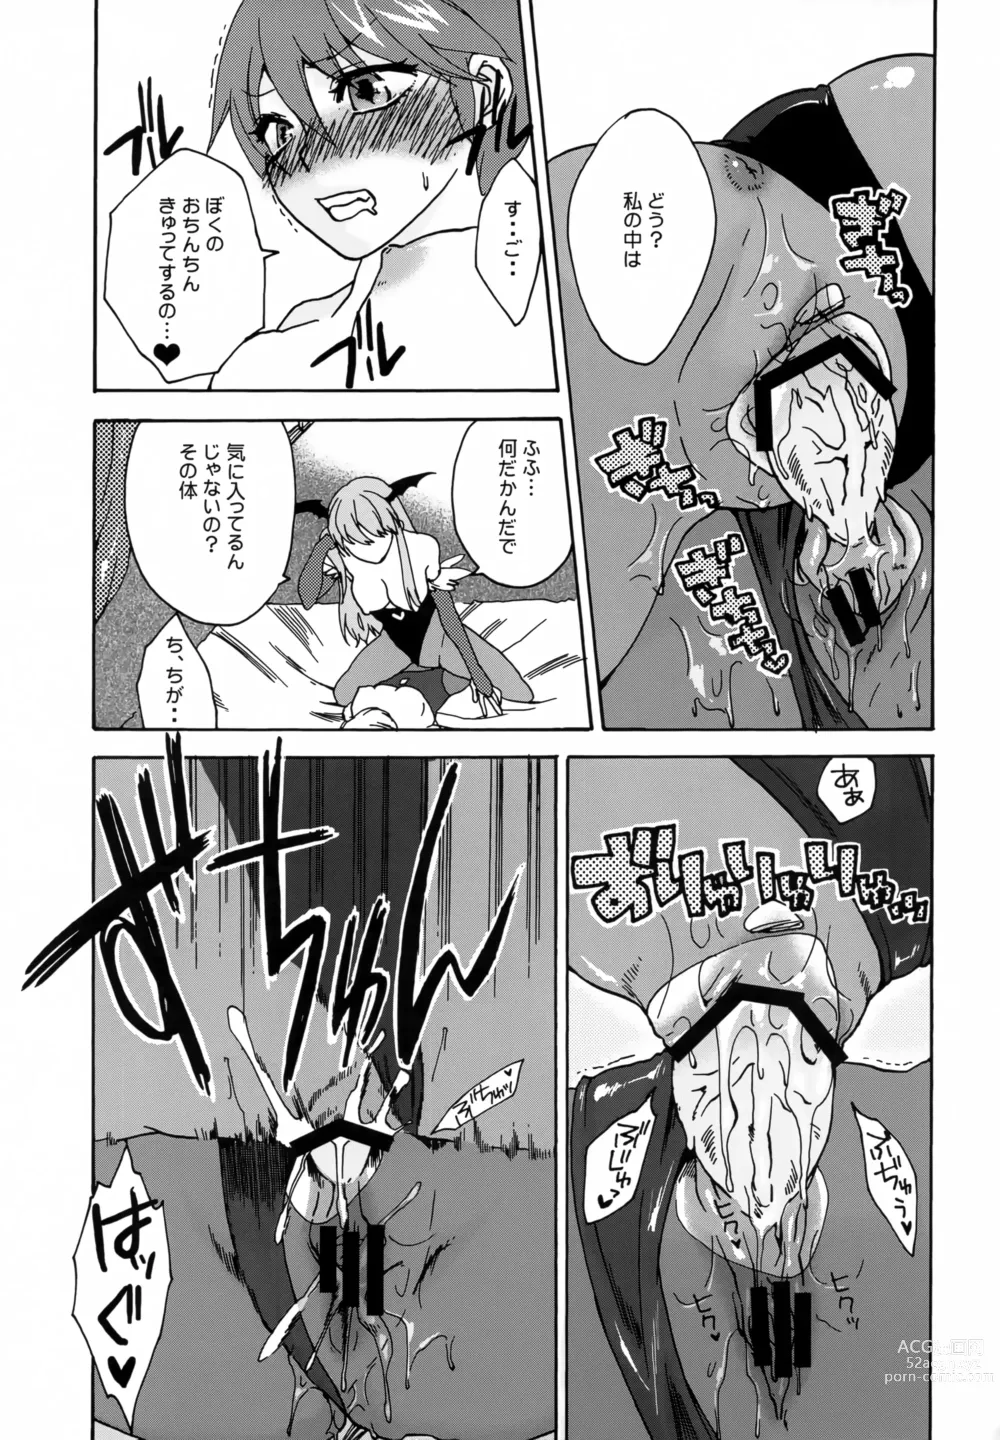 Page 24 of doujinshi regains